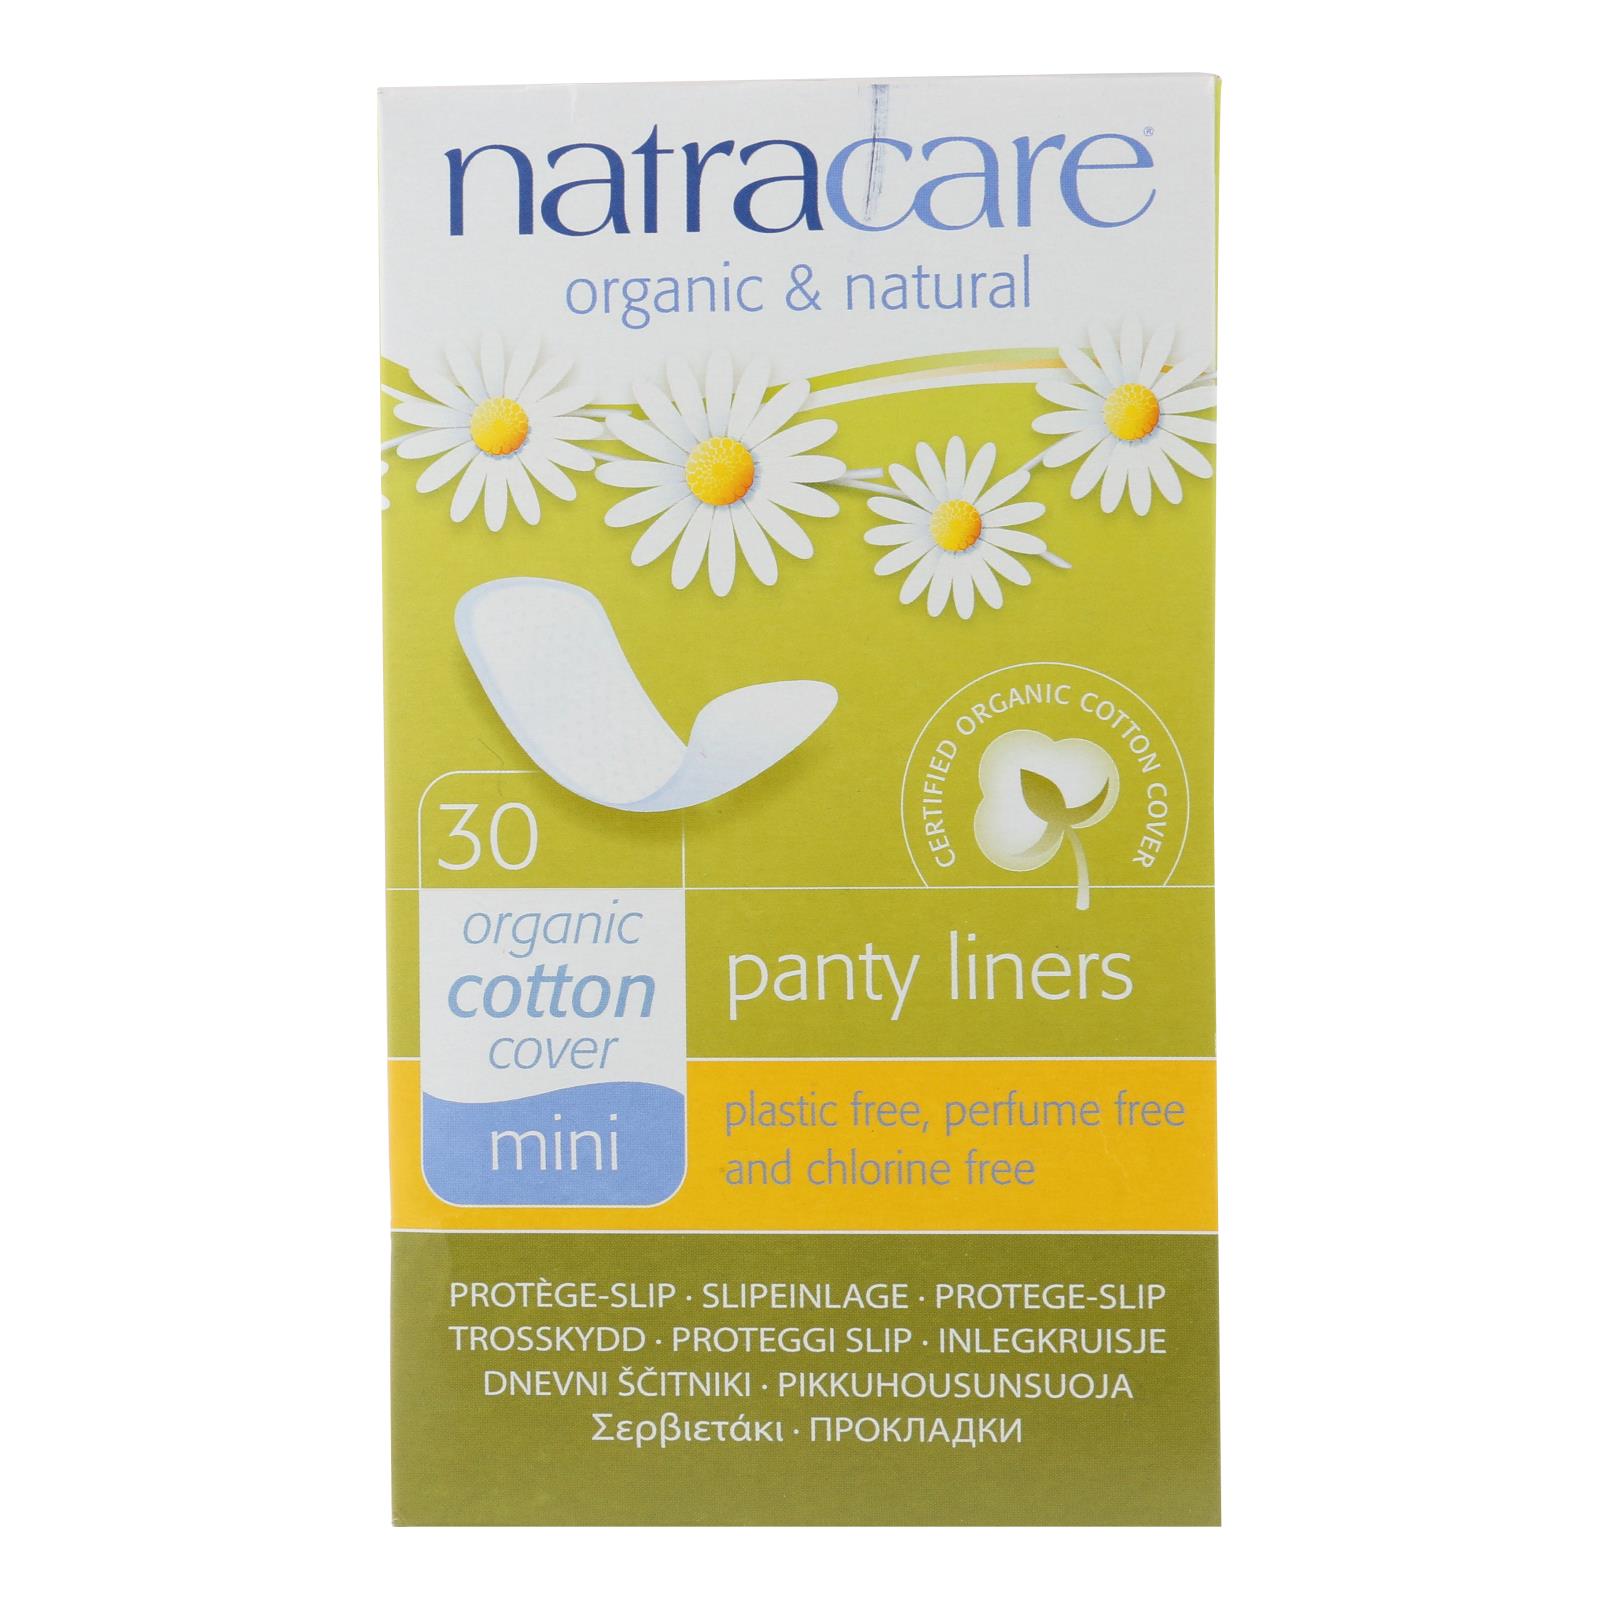 Natracare Mini Panty Liners - 10개 묶음상품 - 30 CT